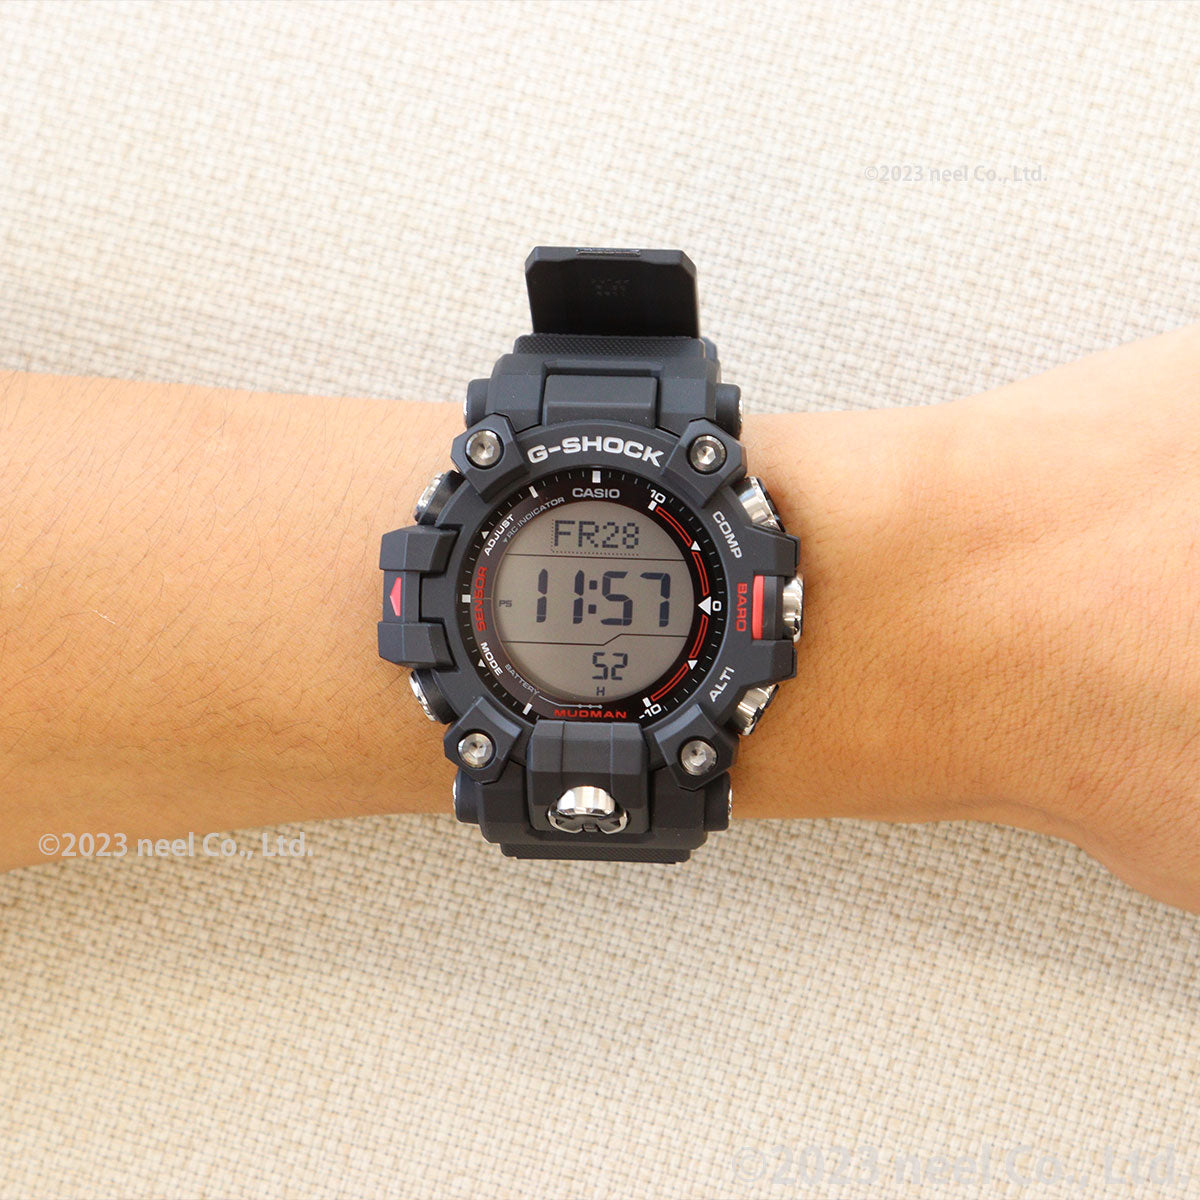 G-SHOCK 電波 ソーラー 電波時計 カシオ Gショック マッドマン MUDMAN 腕時計 メンズ MASTER OF G GW-9500-1JF